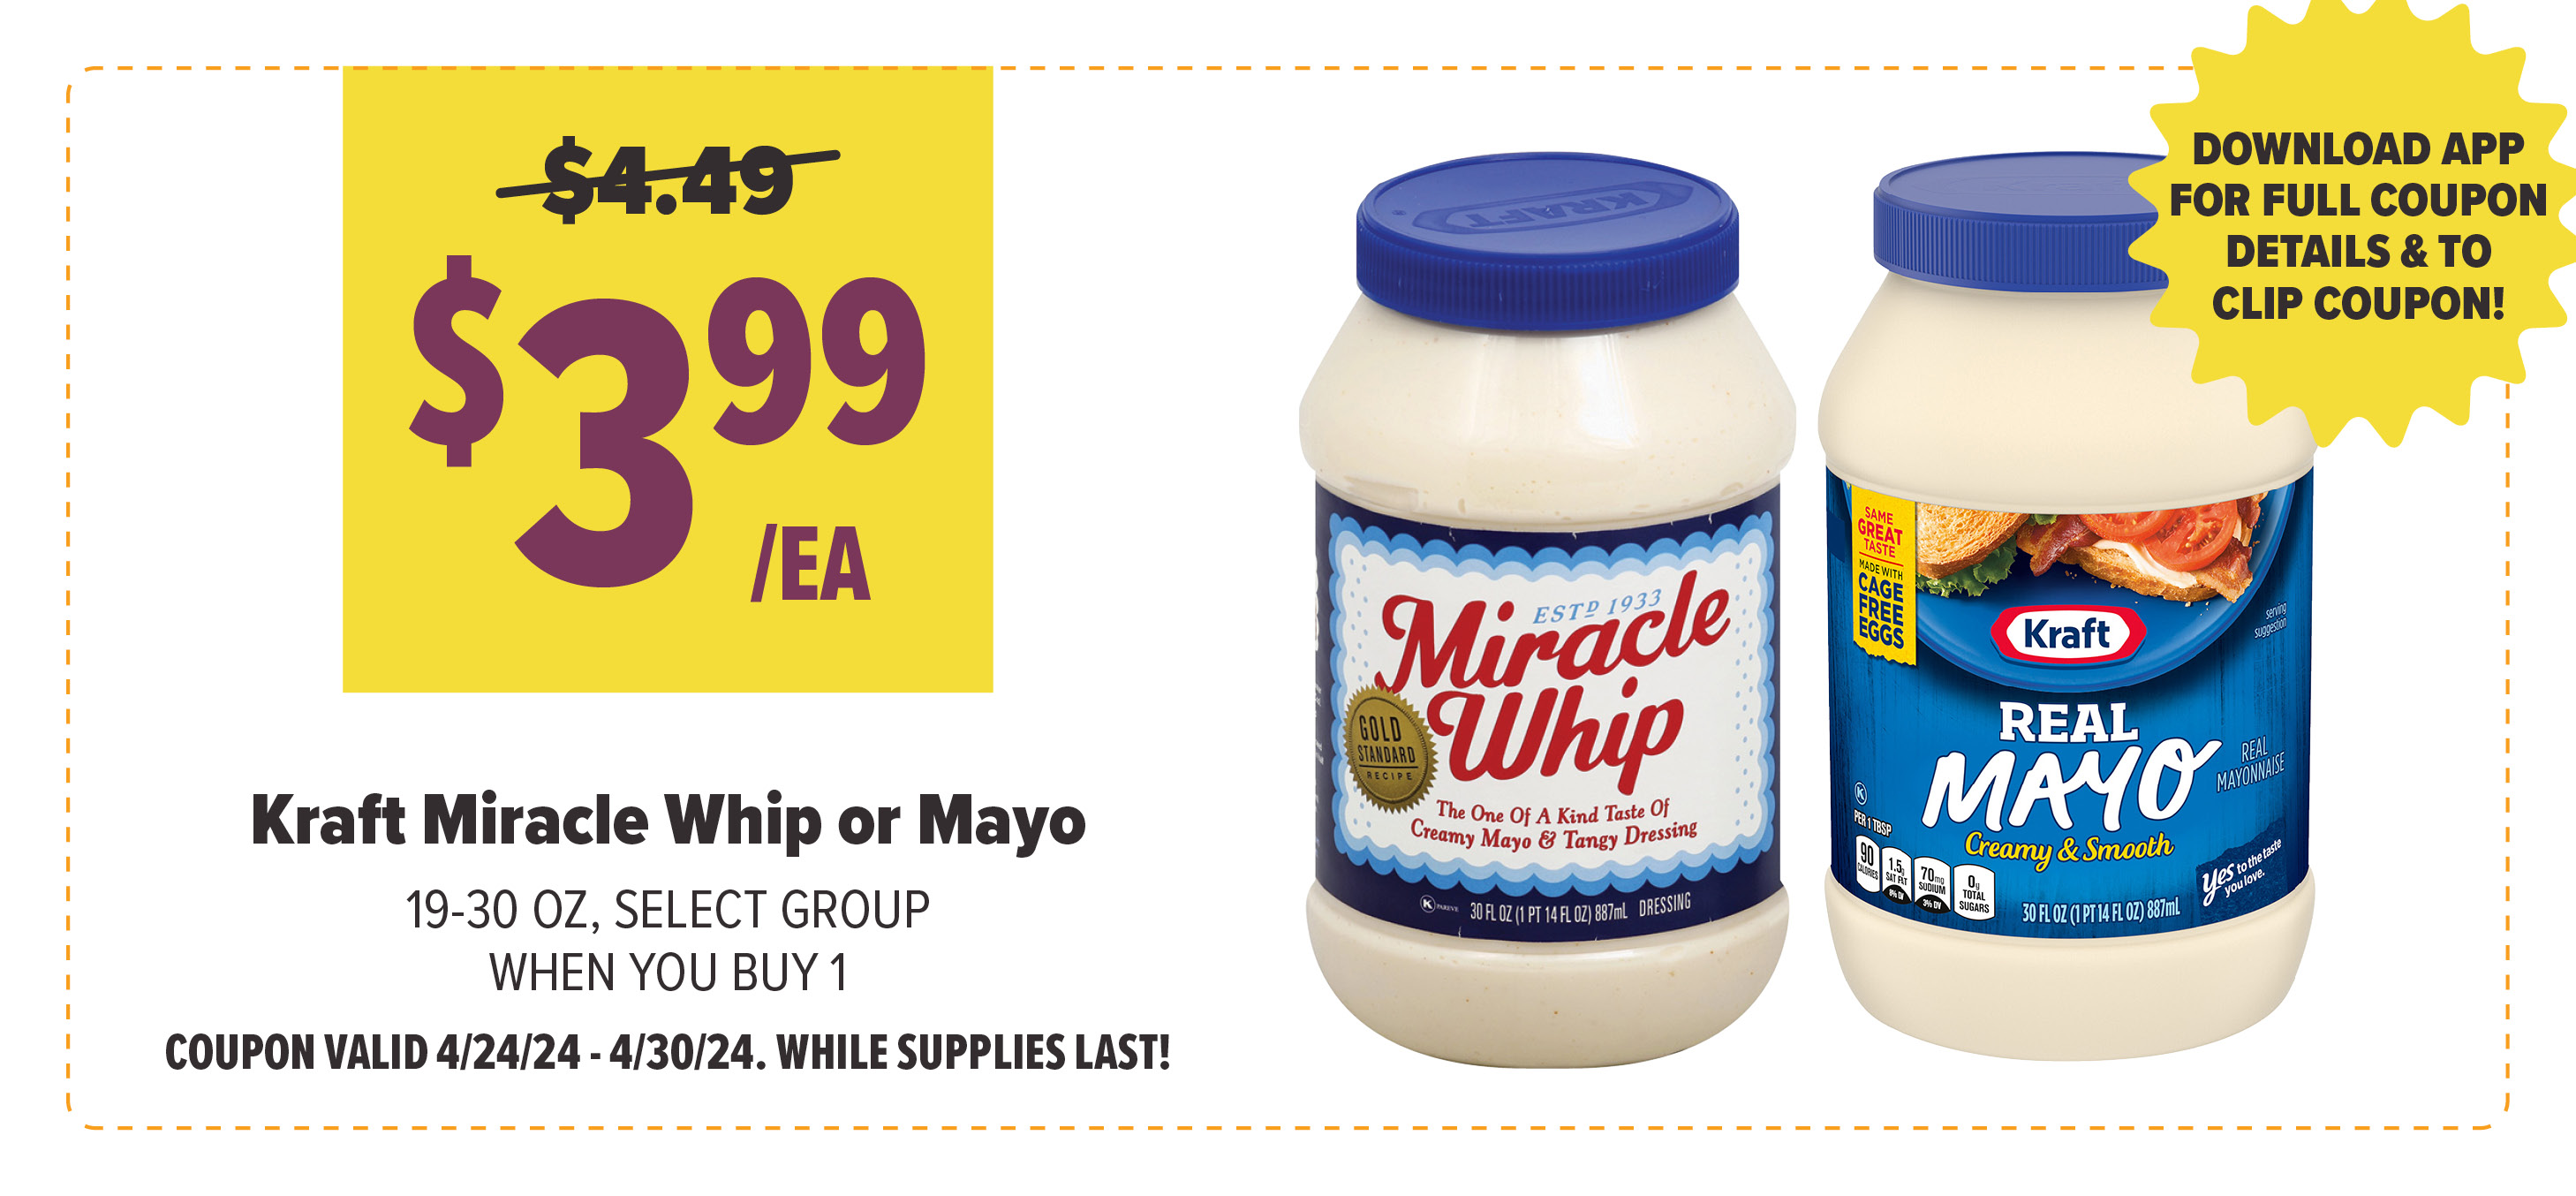 Digital Deal of the Week, Kraft Miracle Whip or Mayo